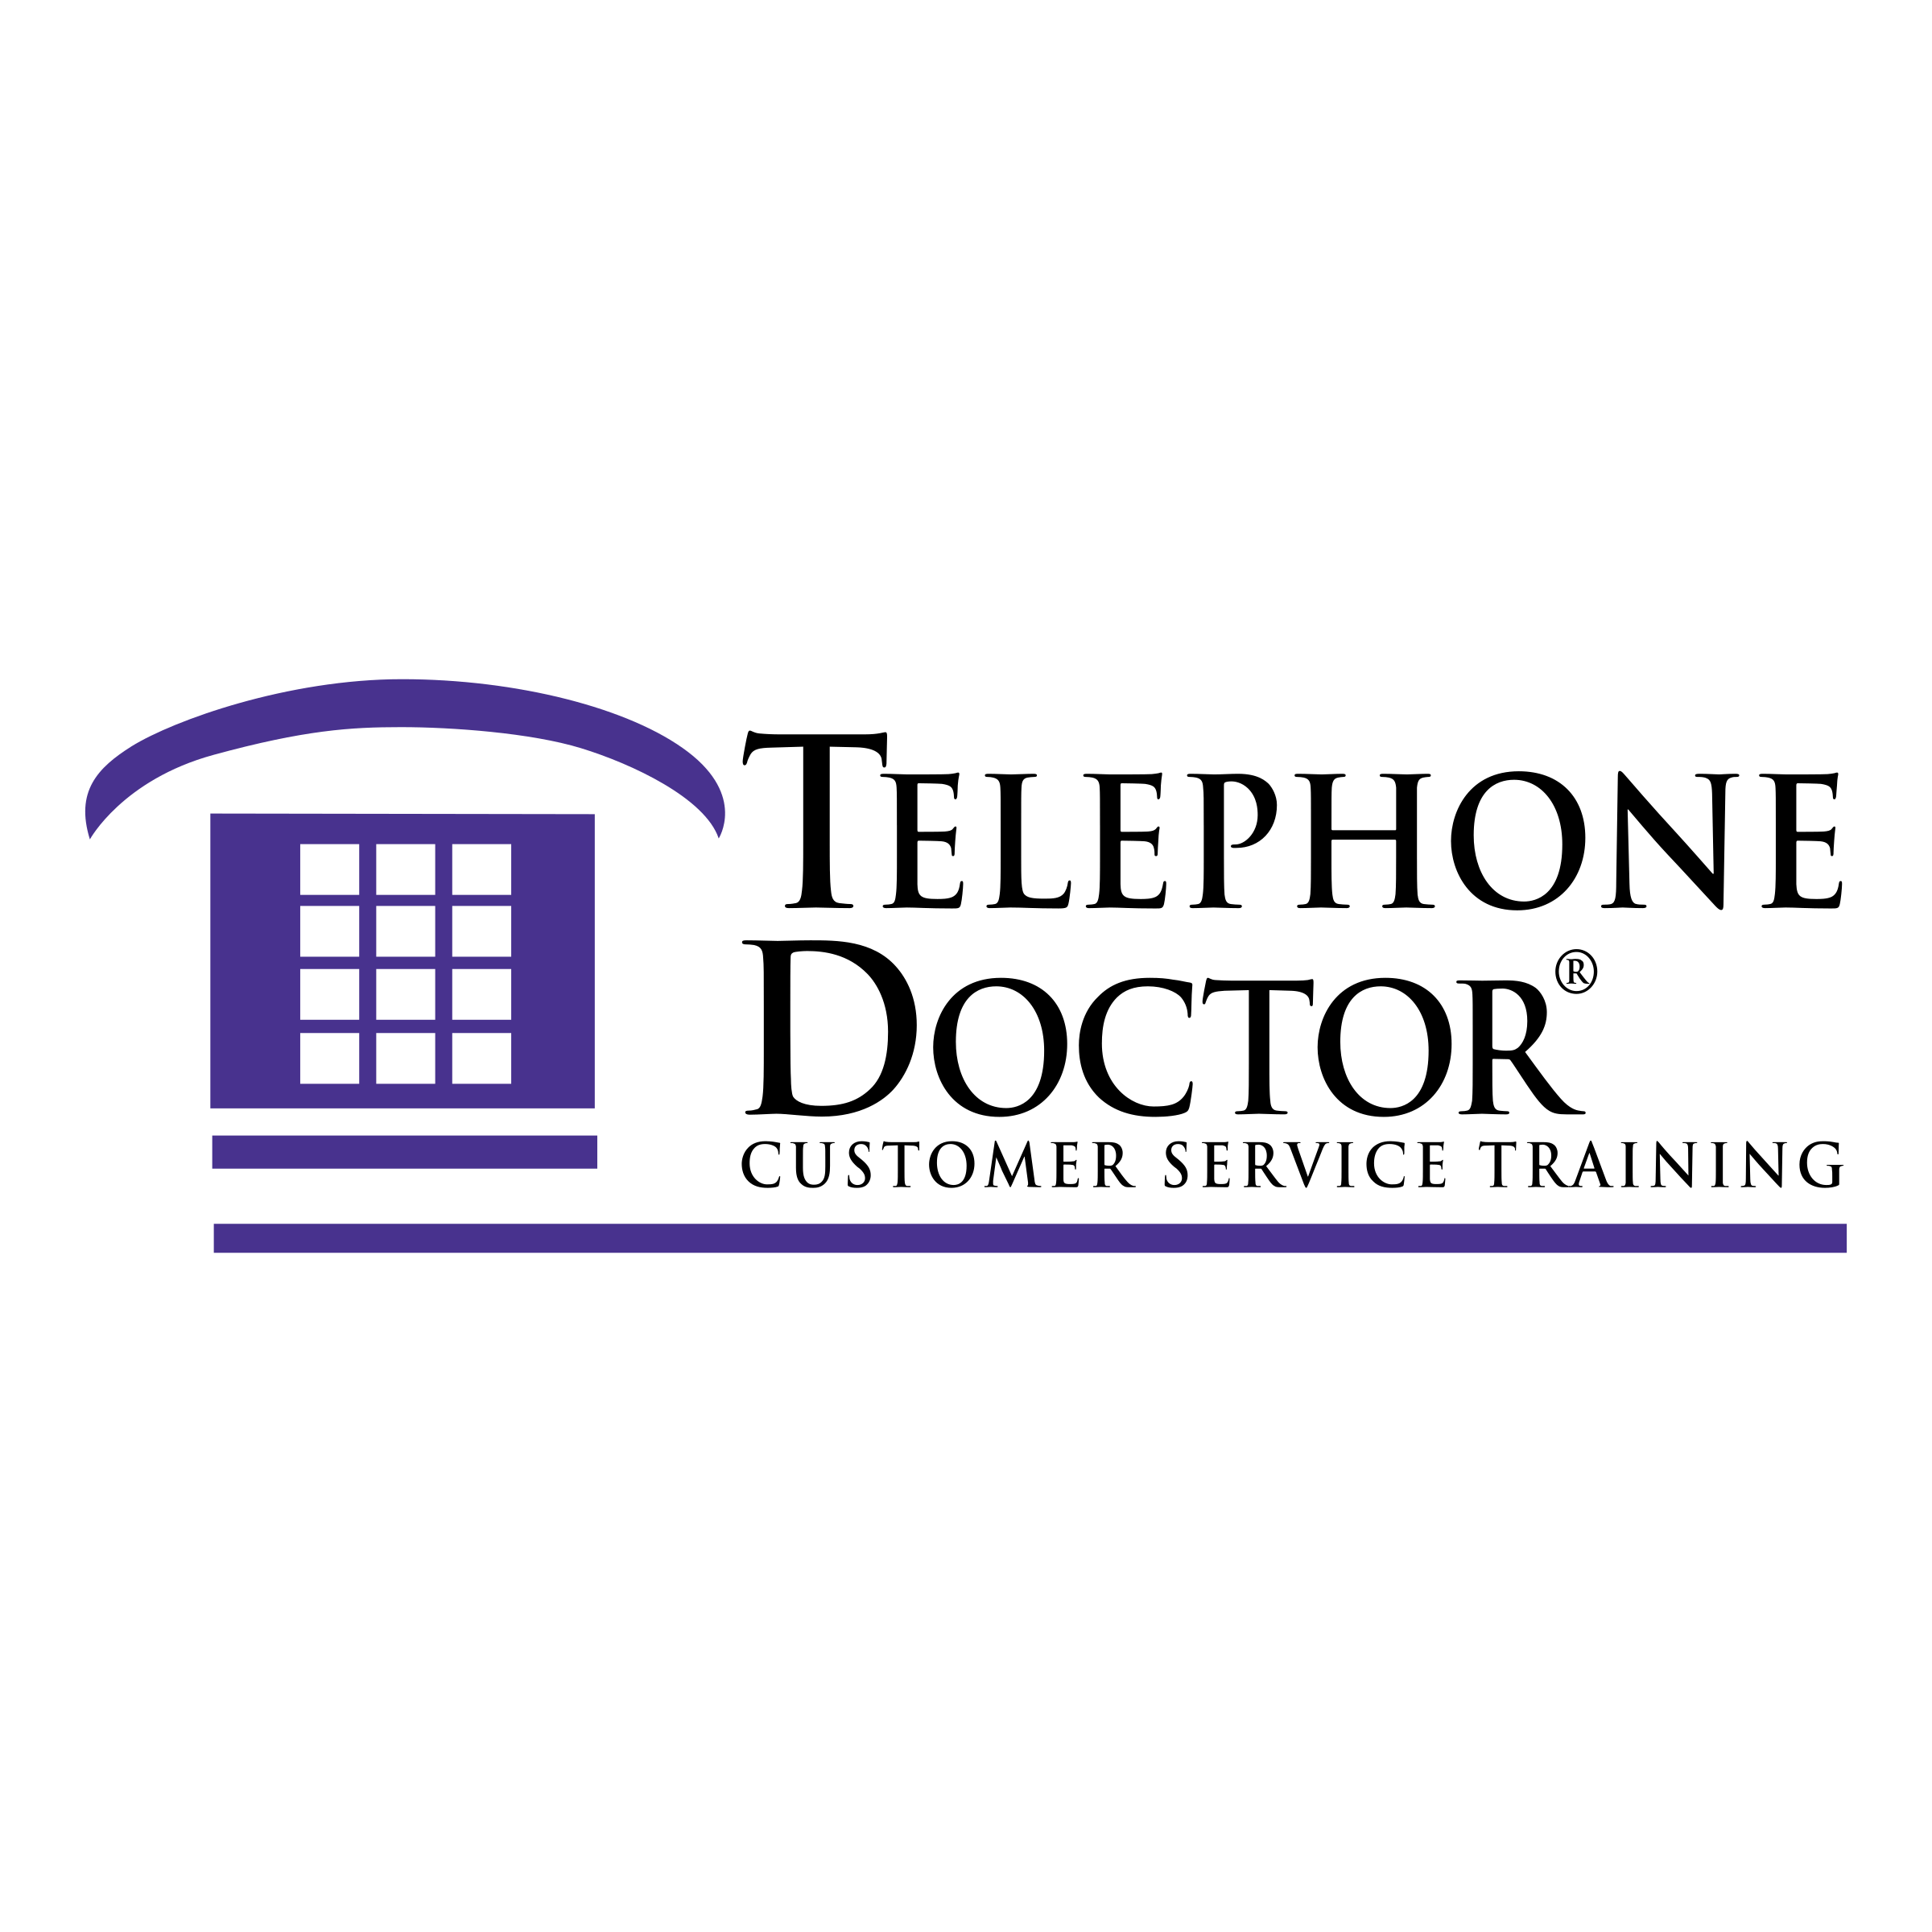 Telephone Transparent Logo - Telephone Doctor Logo PNG Transparent & SVG Vector